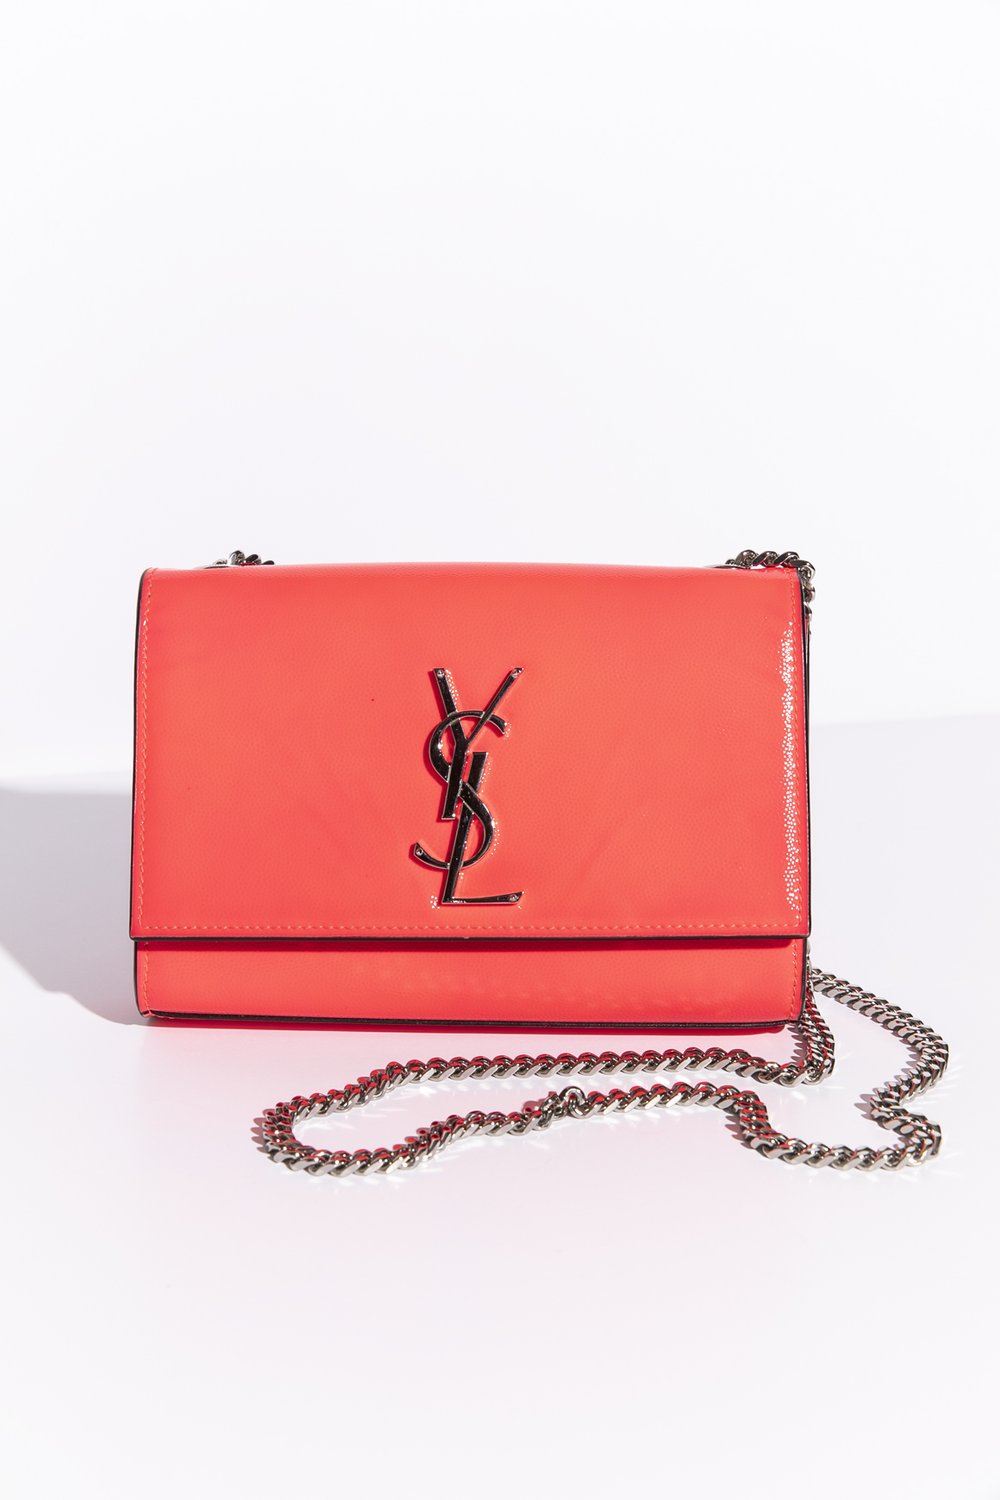 Shop Kate Moss Ysl Bag